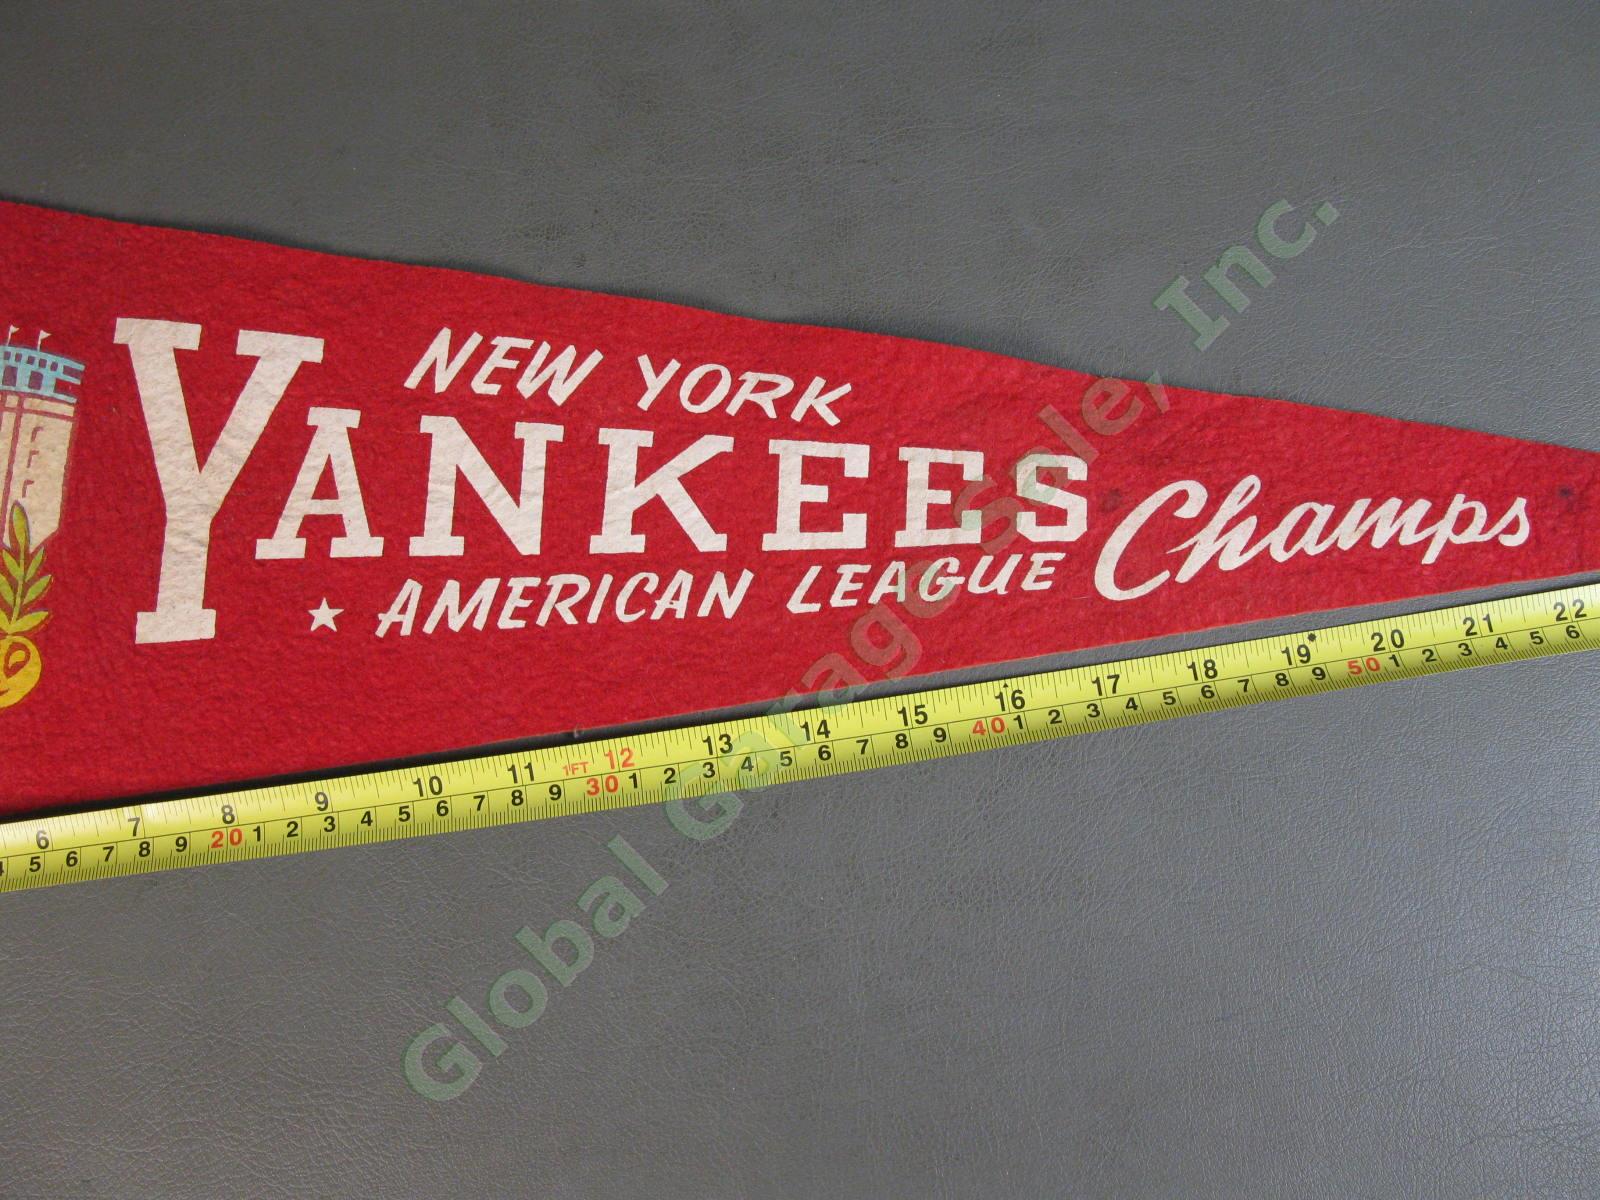 VTG 1930s New York Yankees American League Champs 3/4 Size Felt Pennant Cane Set 6